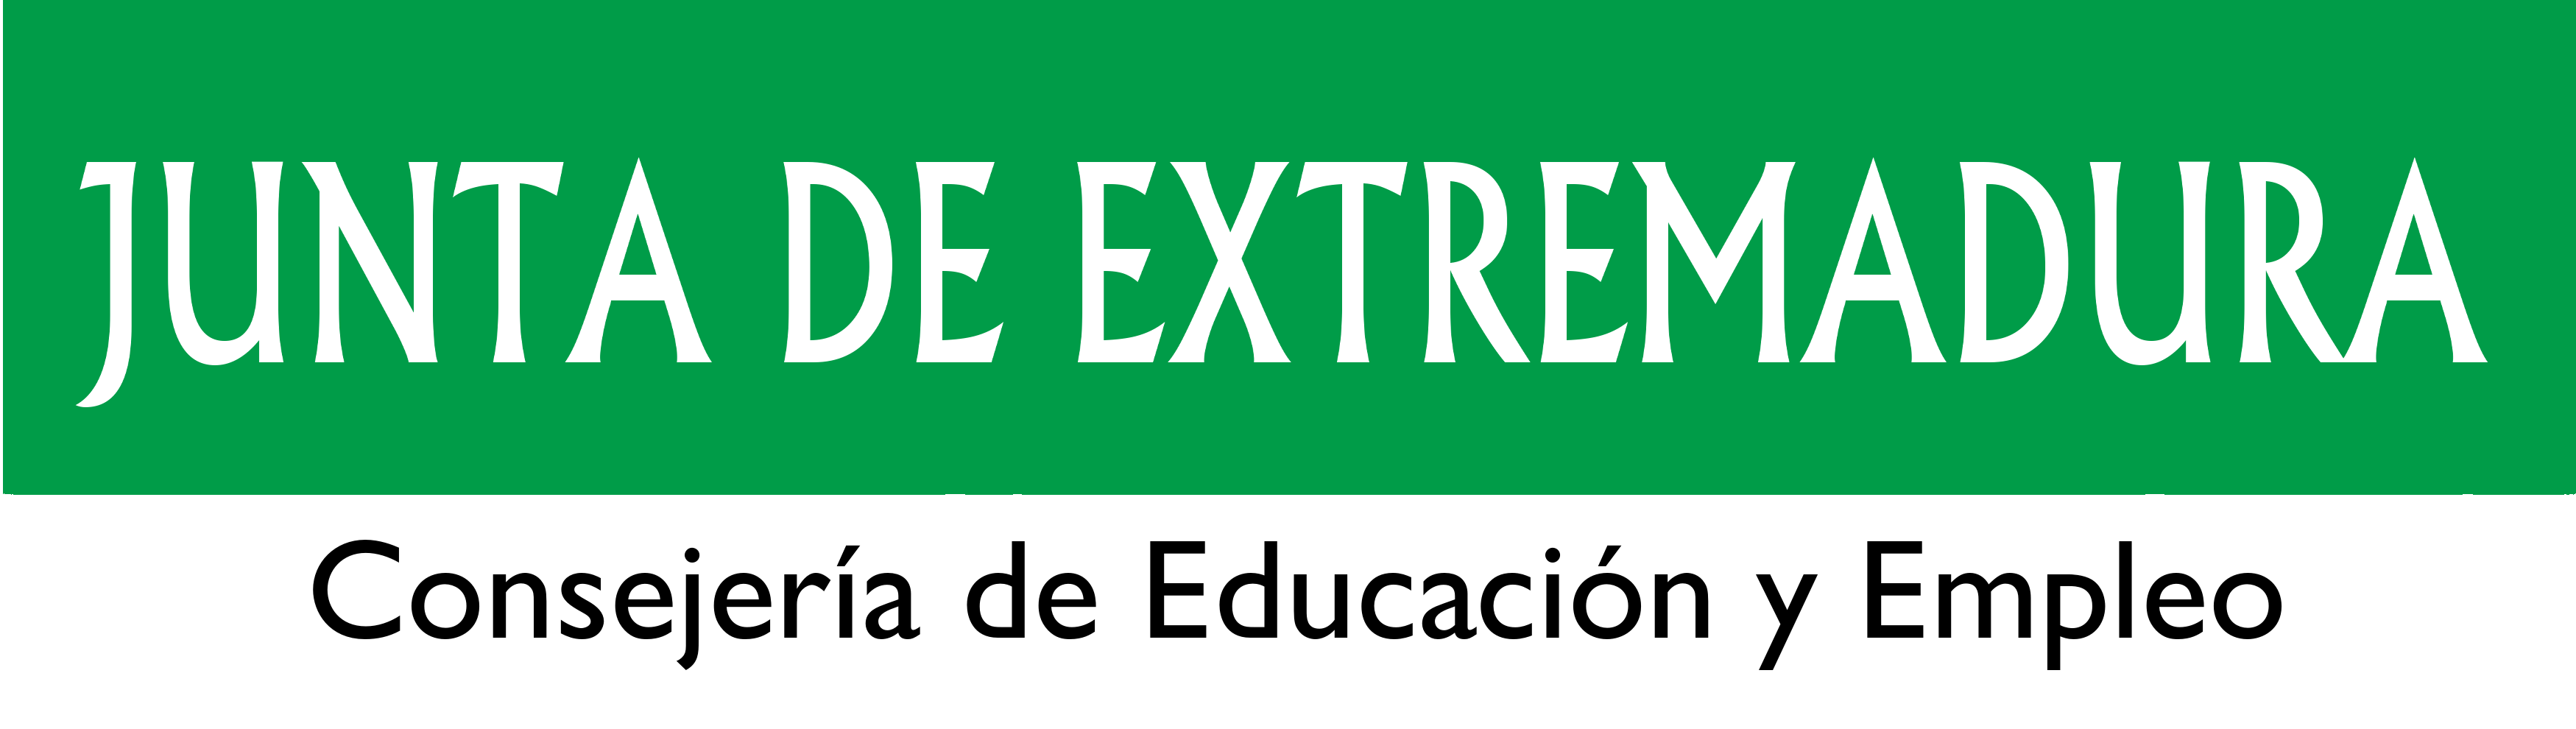 Junta de Extremadura consejeria fondo verde